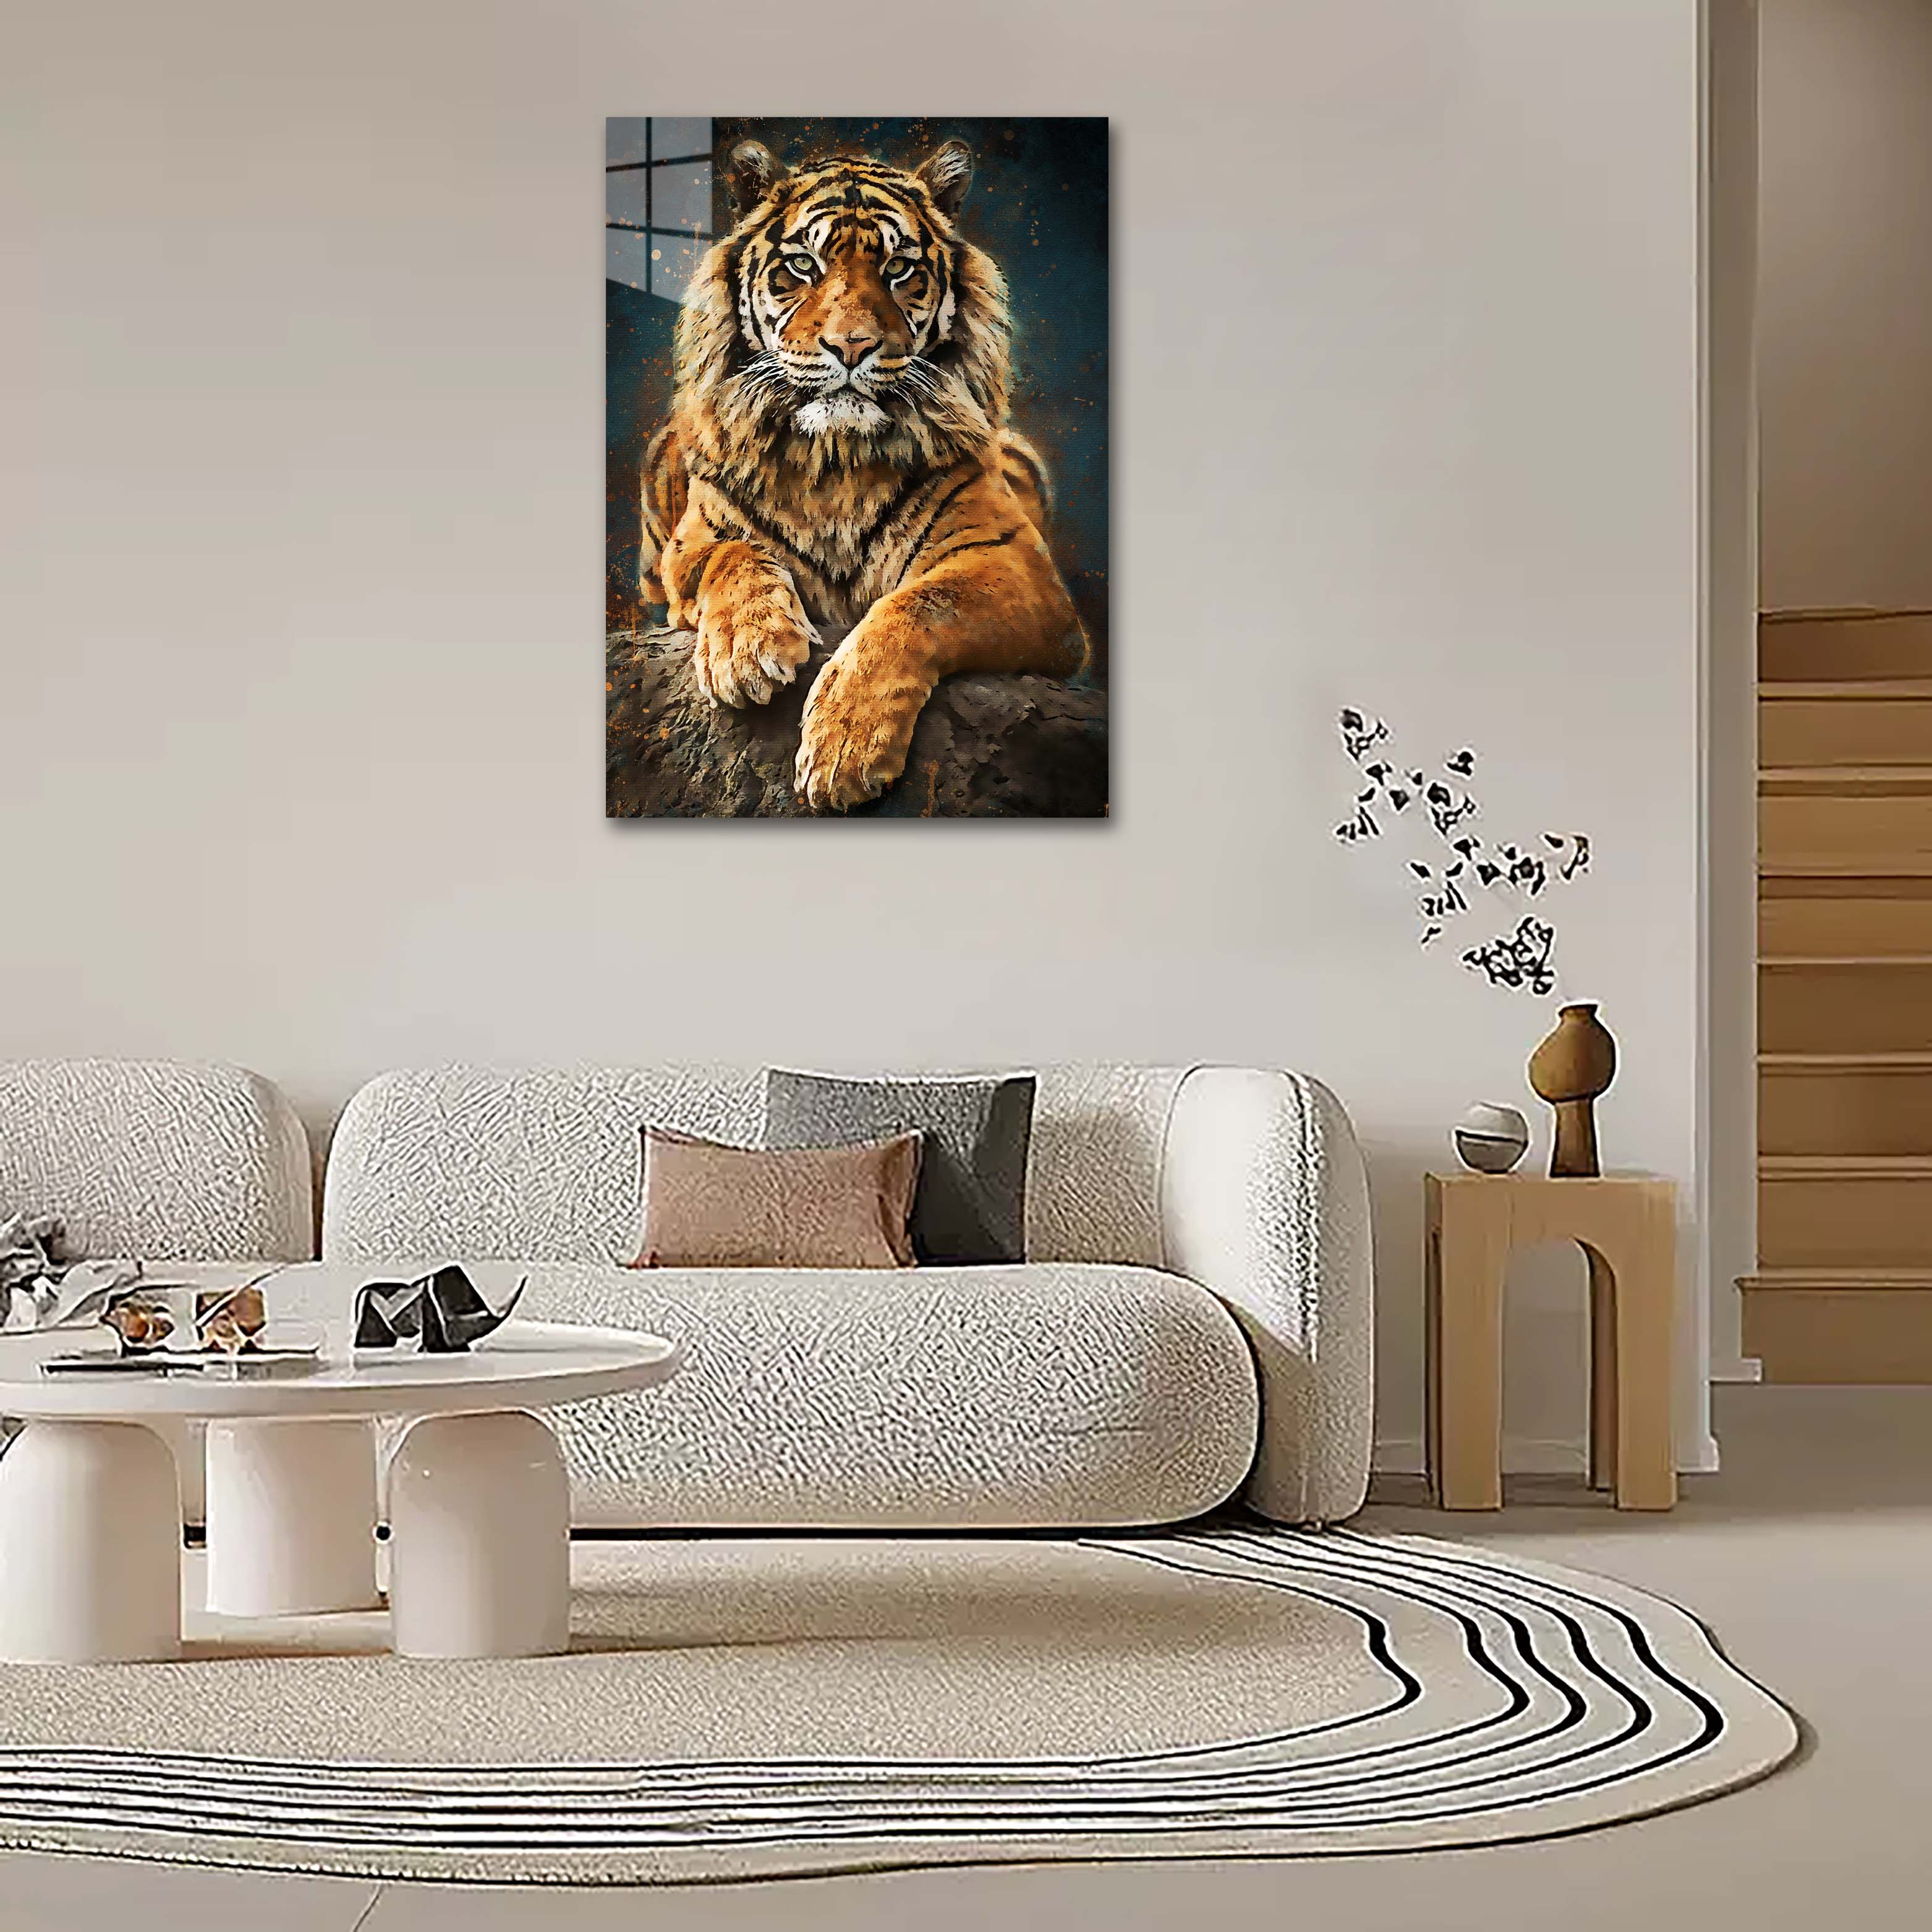 Tiger-designed by @muh_asdar4147